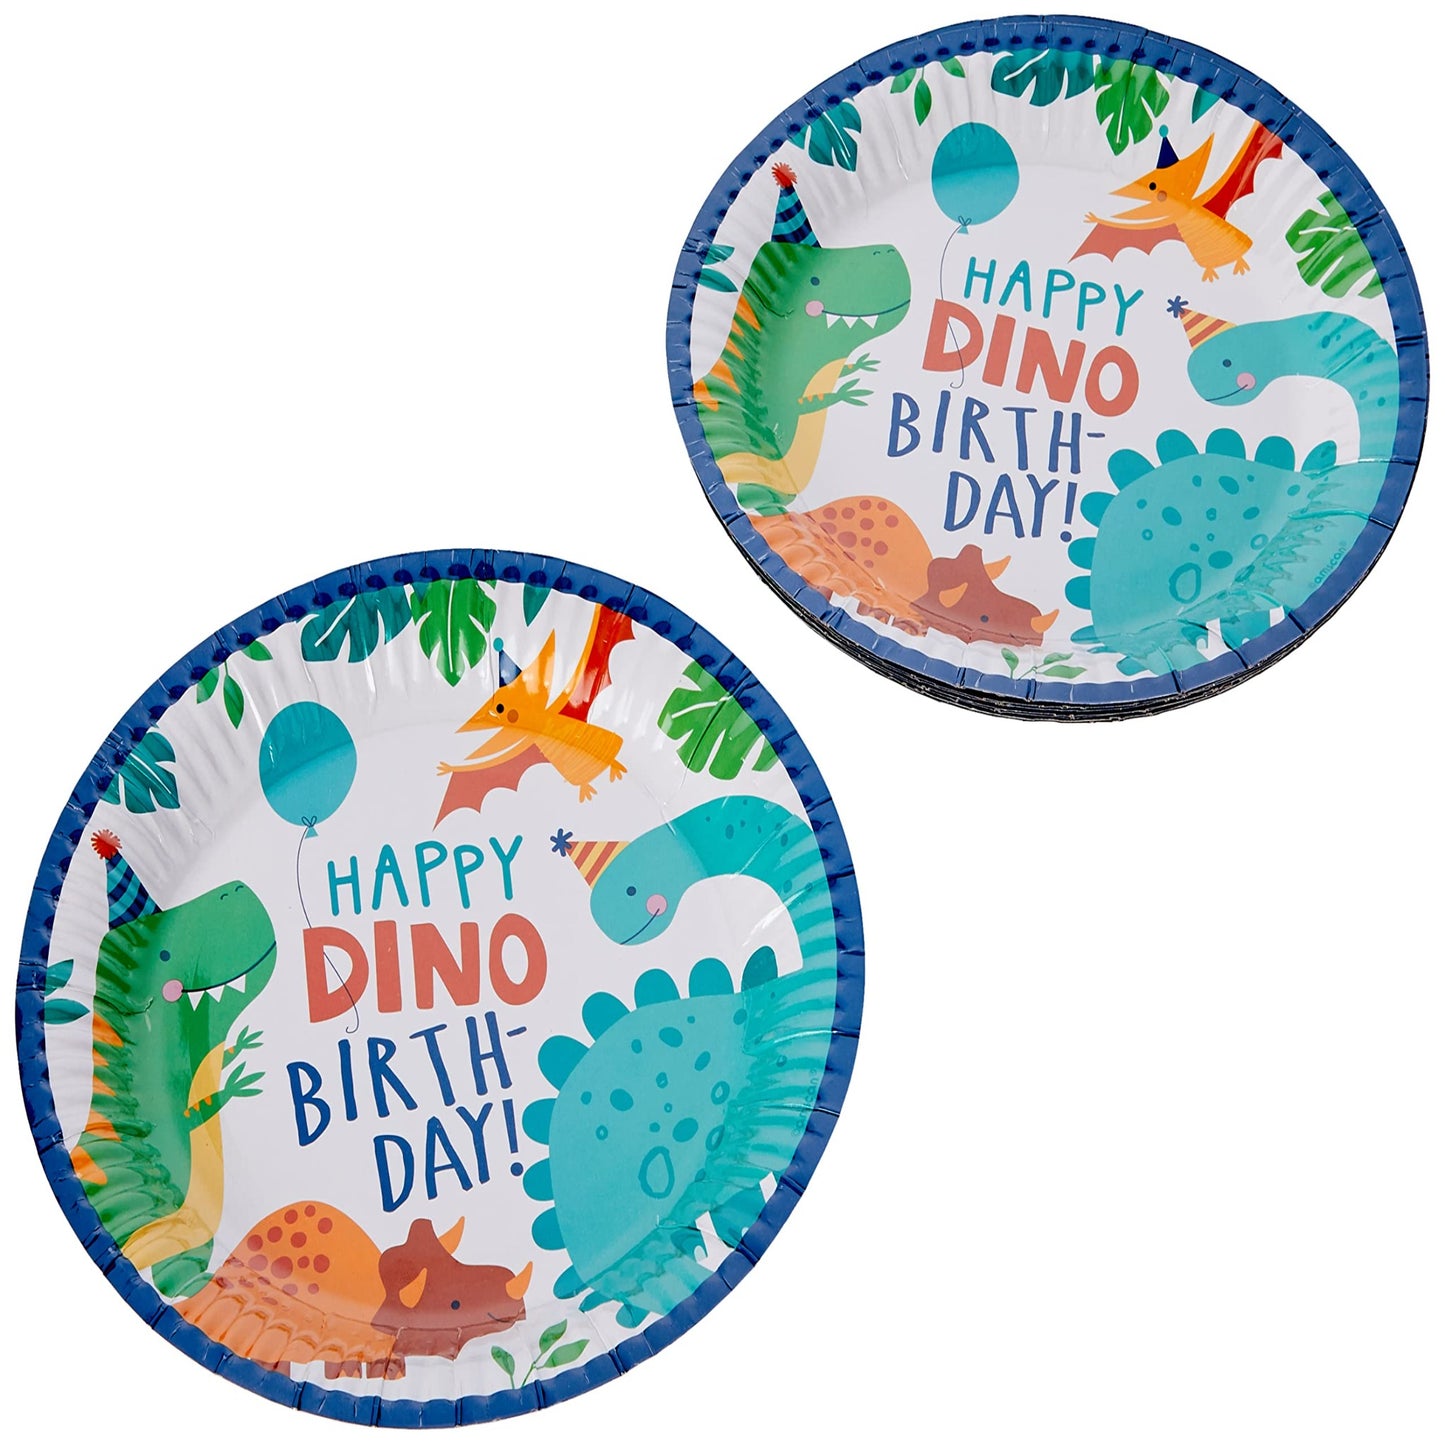 Dino-mite party plates